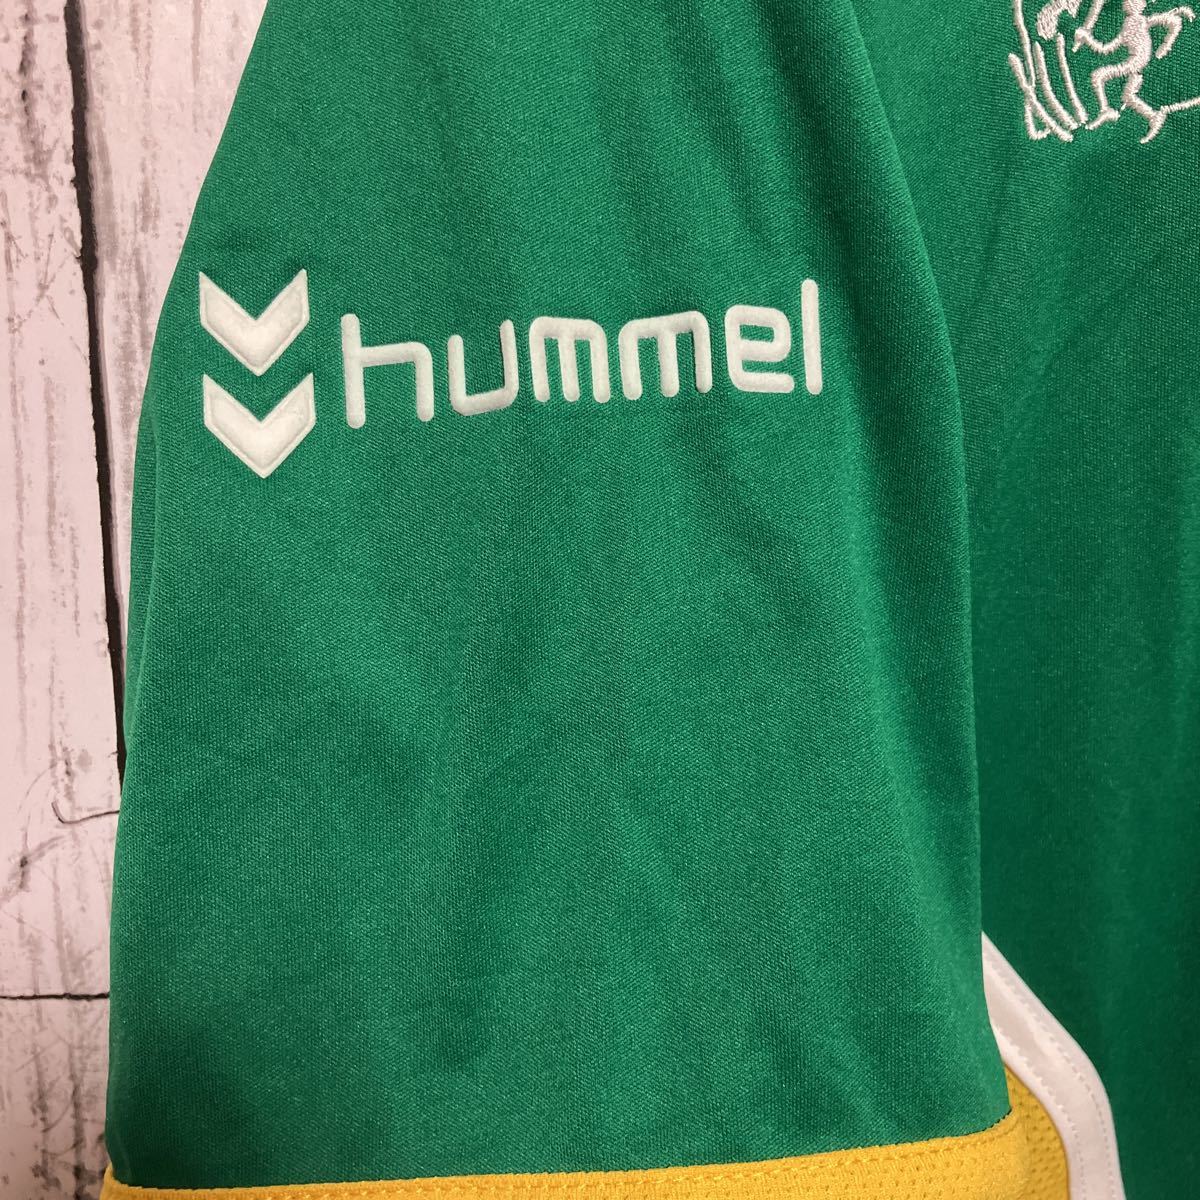 【hunmmel】 ヒュンメル クリケット 南アフリカ代表 半袖ユニフォーム Mサイズ 希少 送料無料_画像7